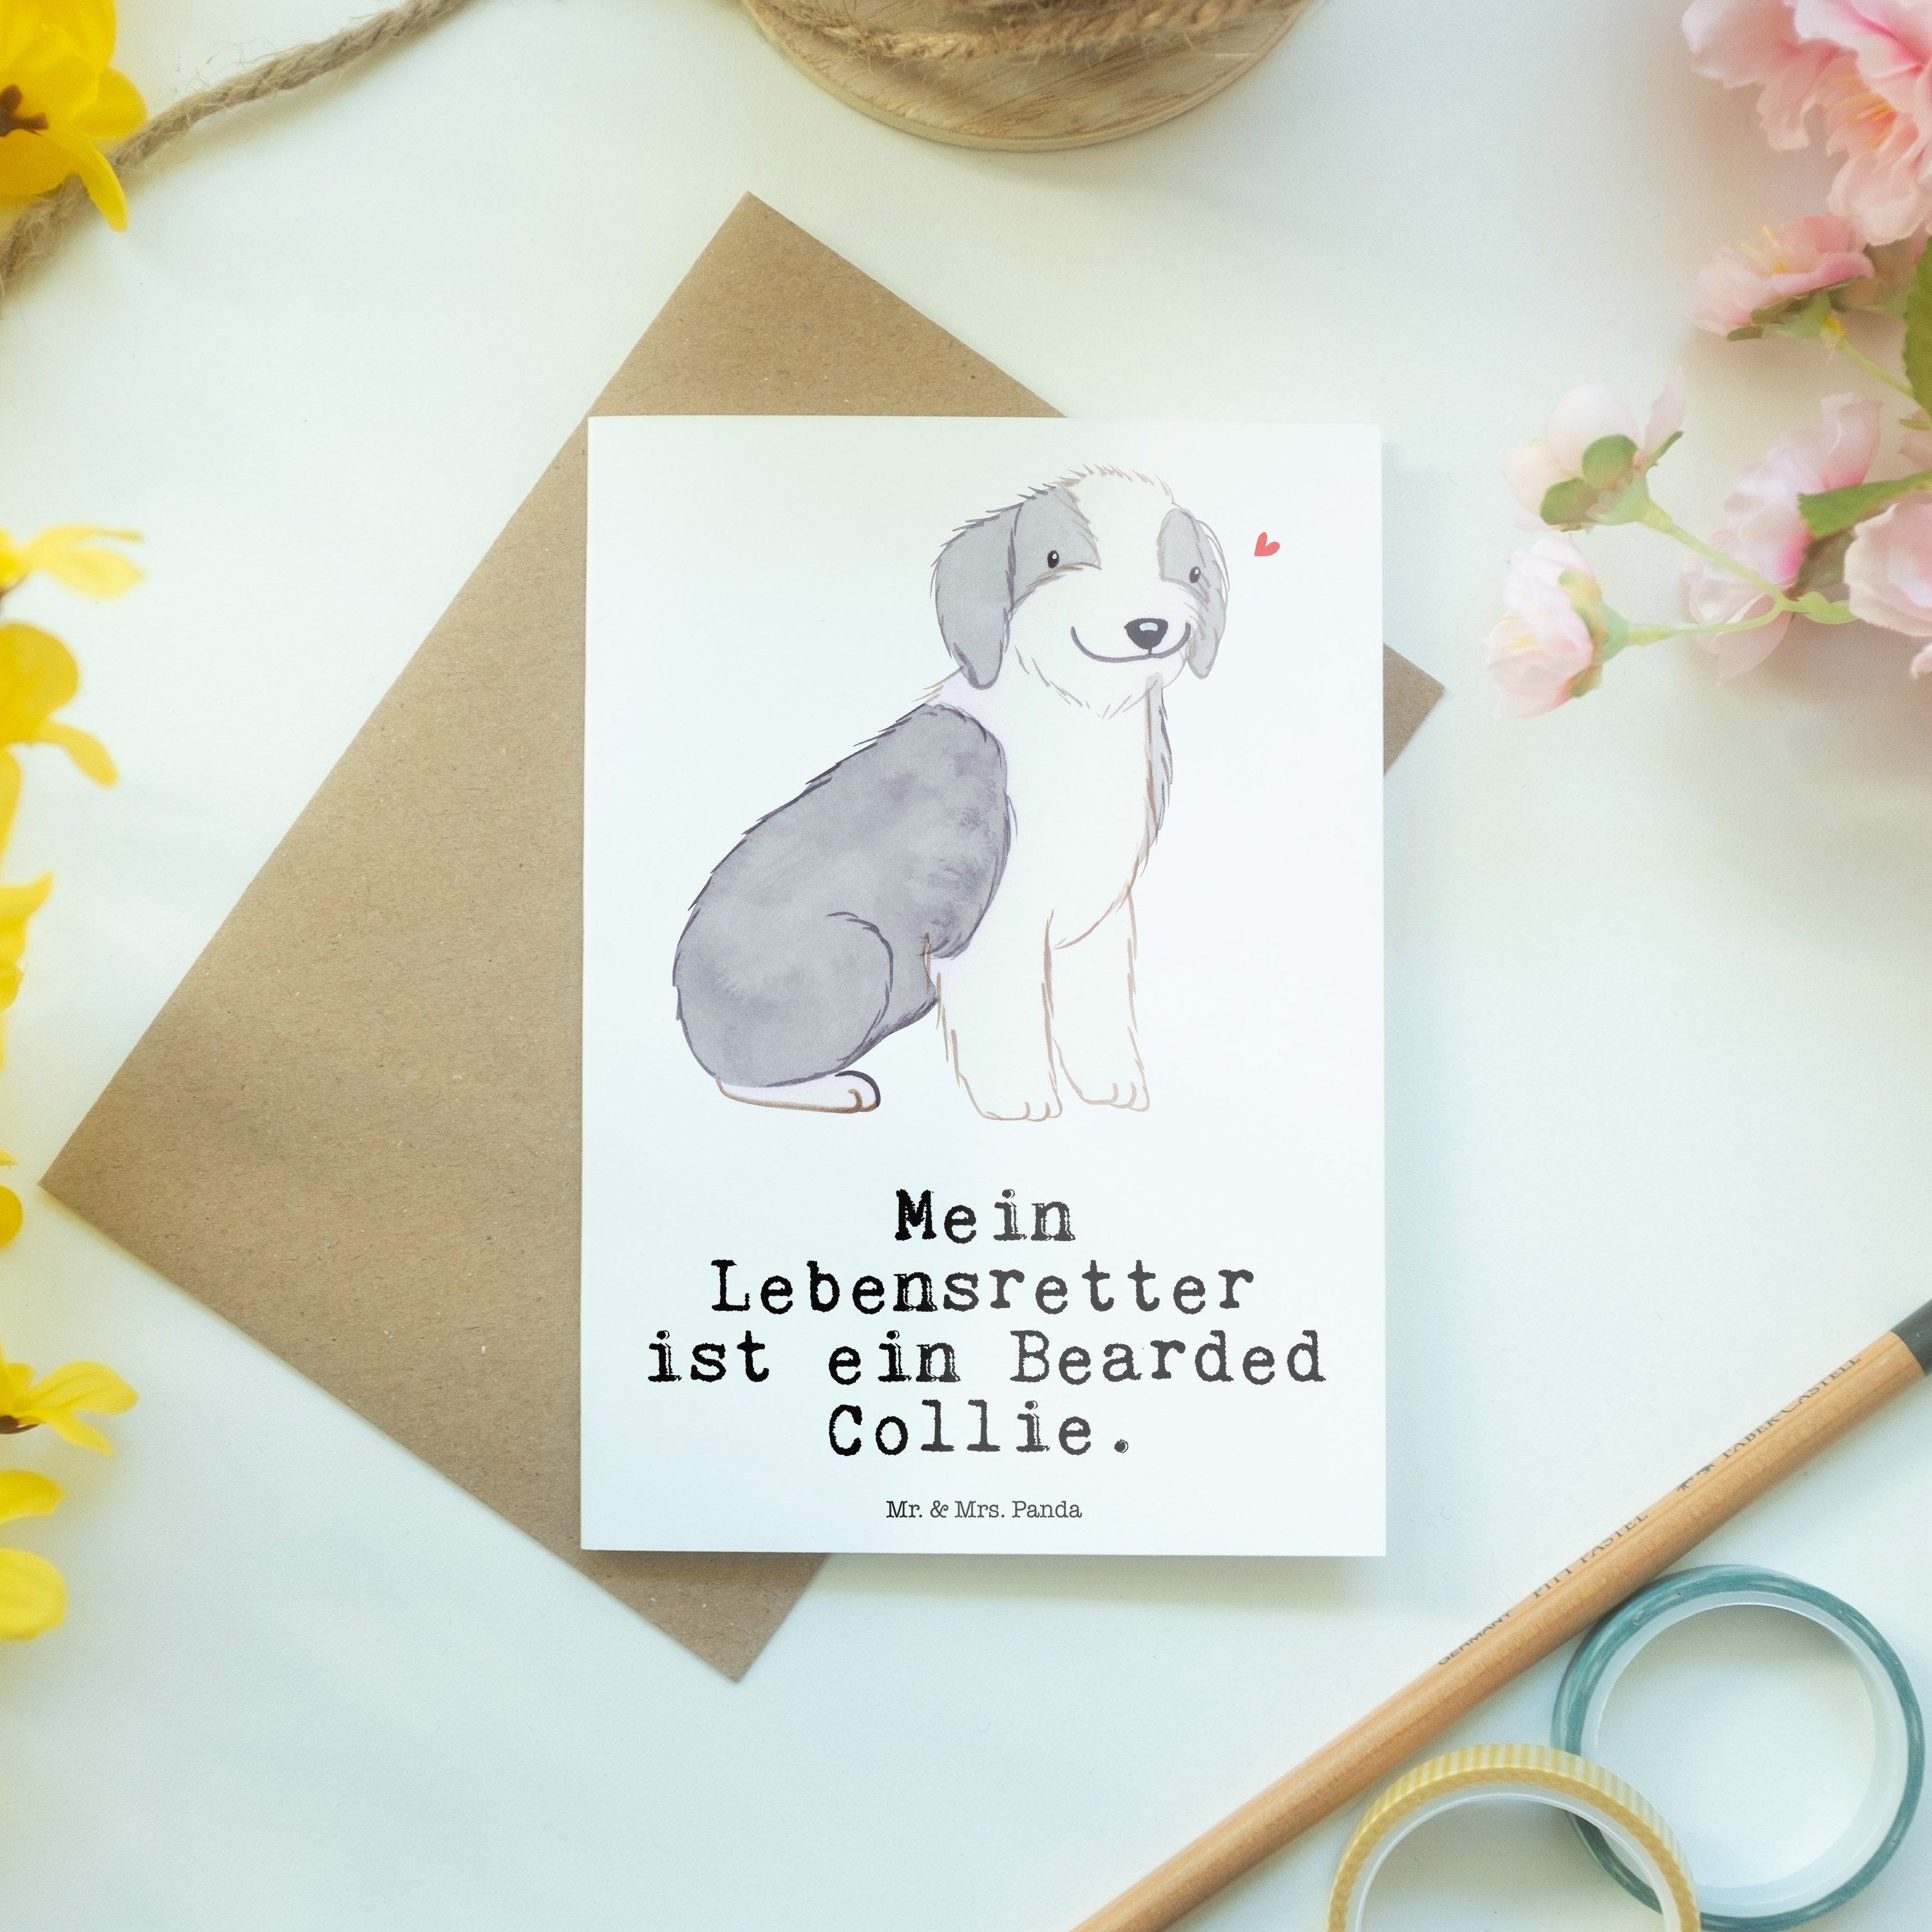 Collie Bearded Mr. Geburtstagskarte - & Hund, Grußkarte - Weiß Geschenk, Lebensretter Panda Mrs.